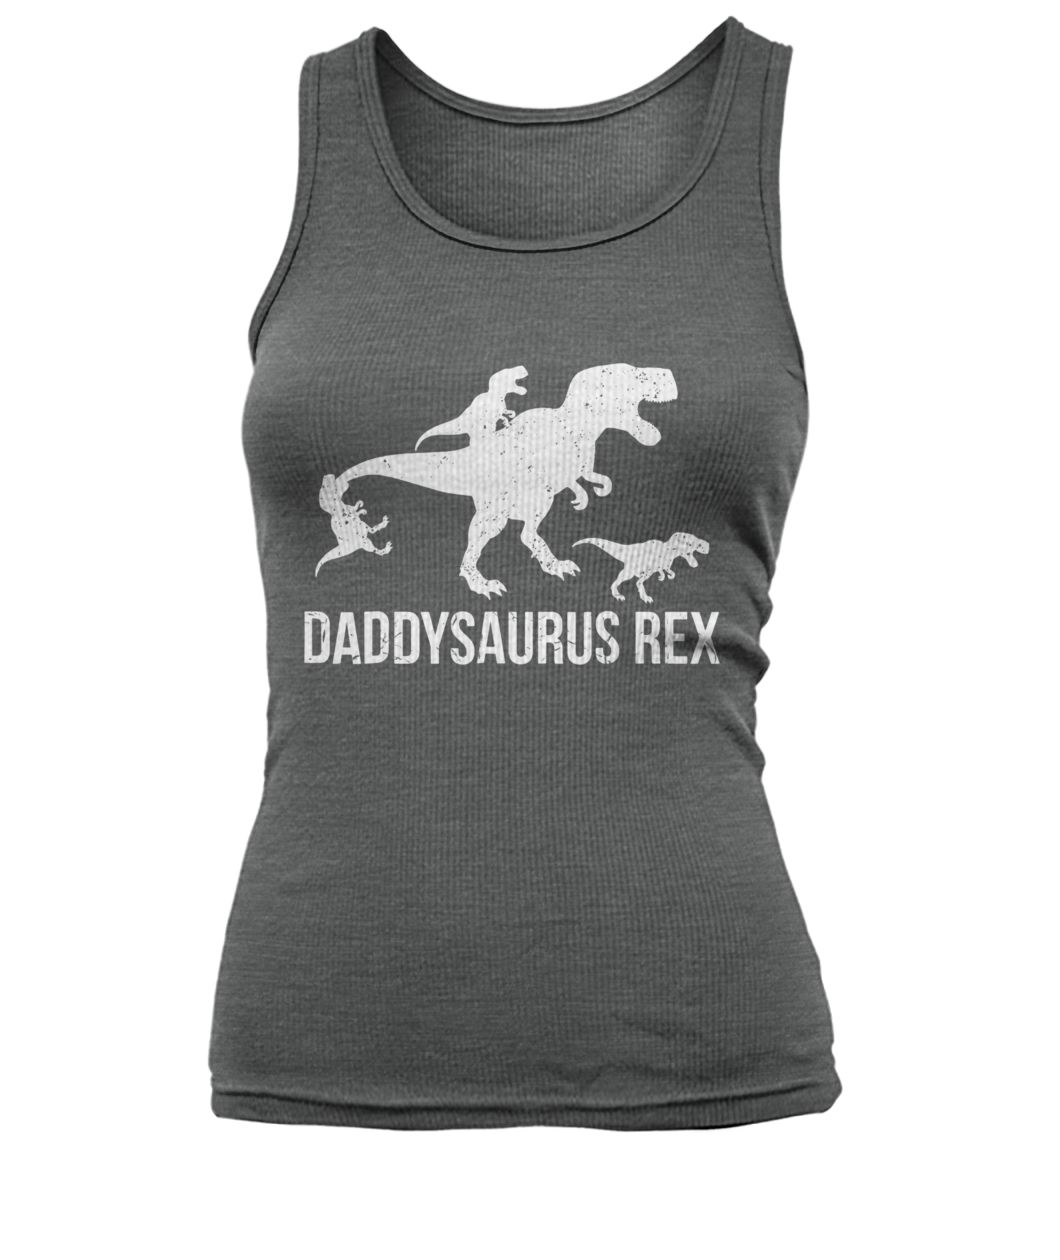 Daddysaurus rex 3 kids women's tank top